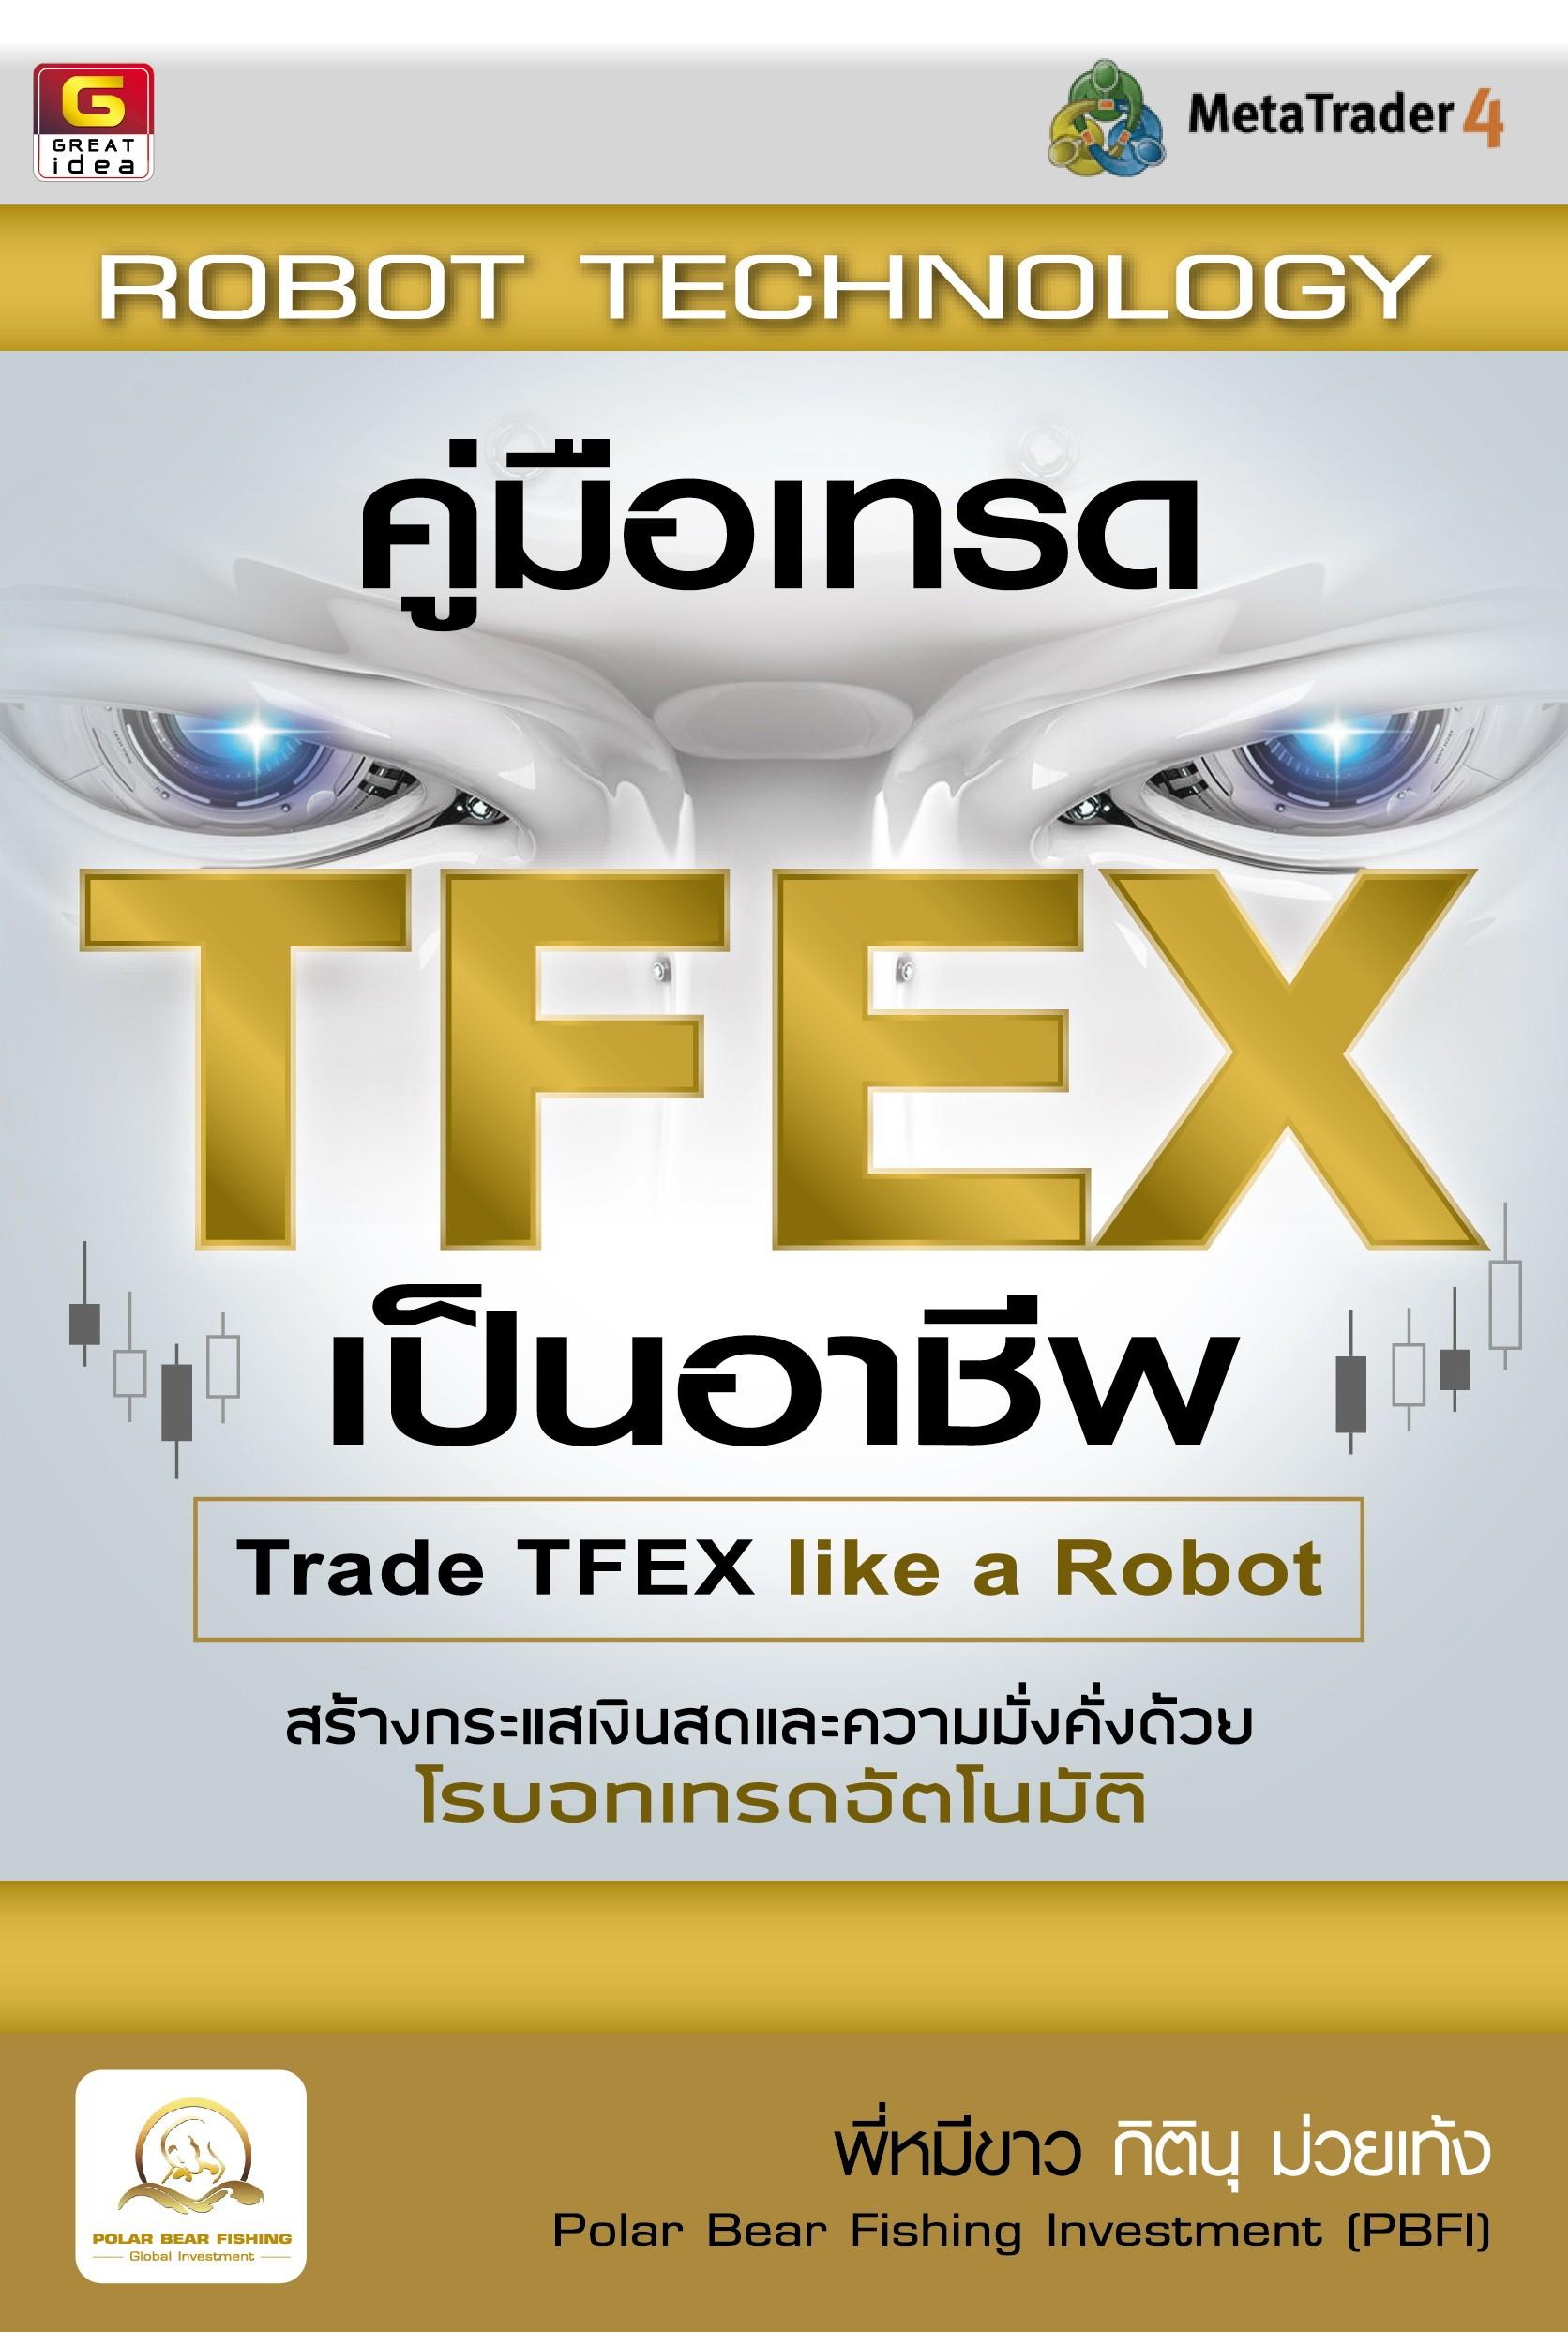 ROBOT TECHNOLOGY  คู่มือเทรด TFEX เป็นอาชีพ